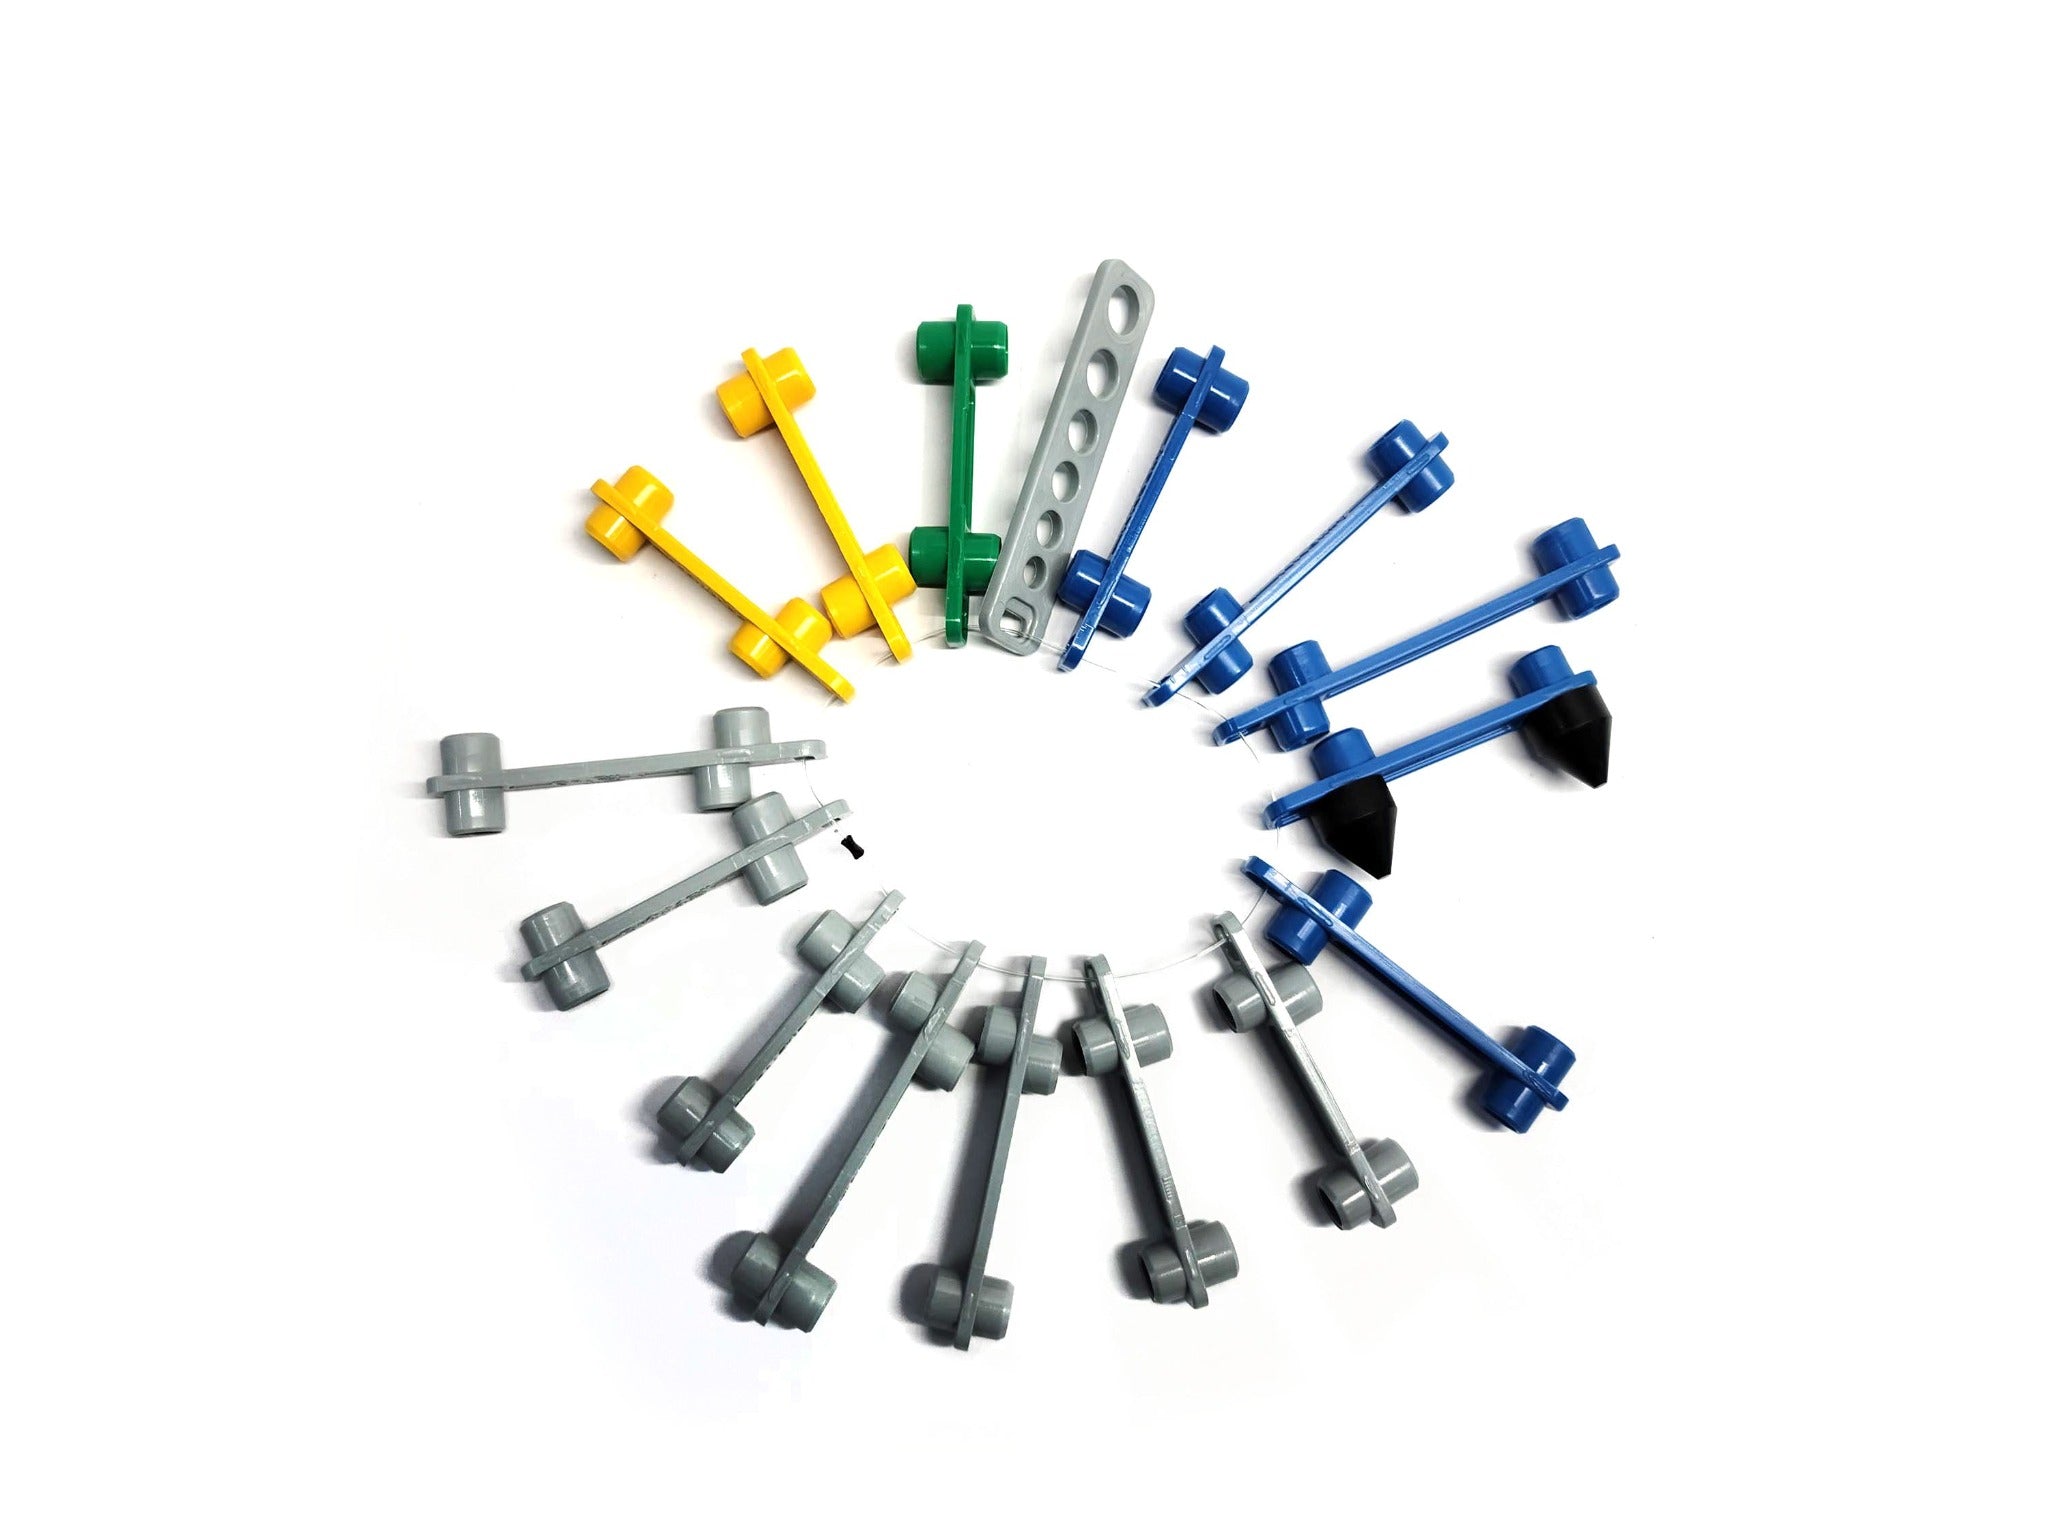 Wheel Bolt Pattern Gauge Set Includes 15 Gauges, 2 Conical Adapters